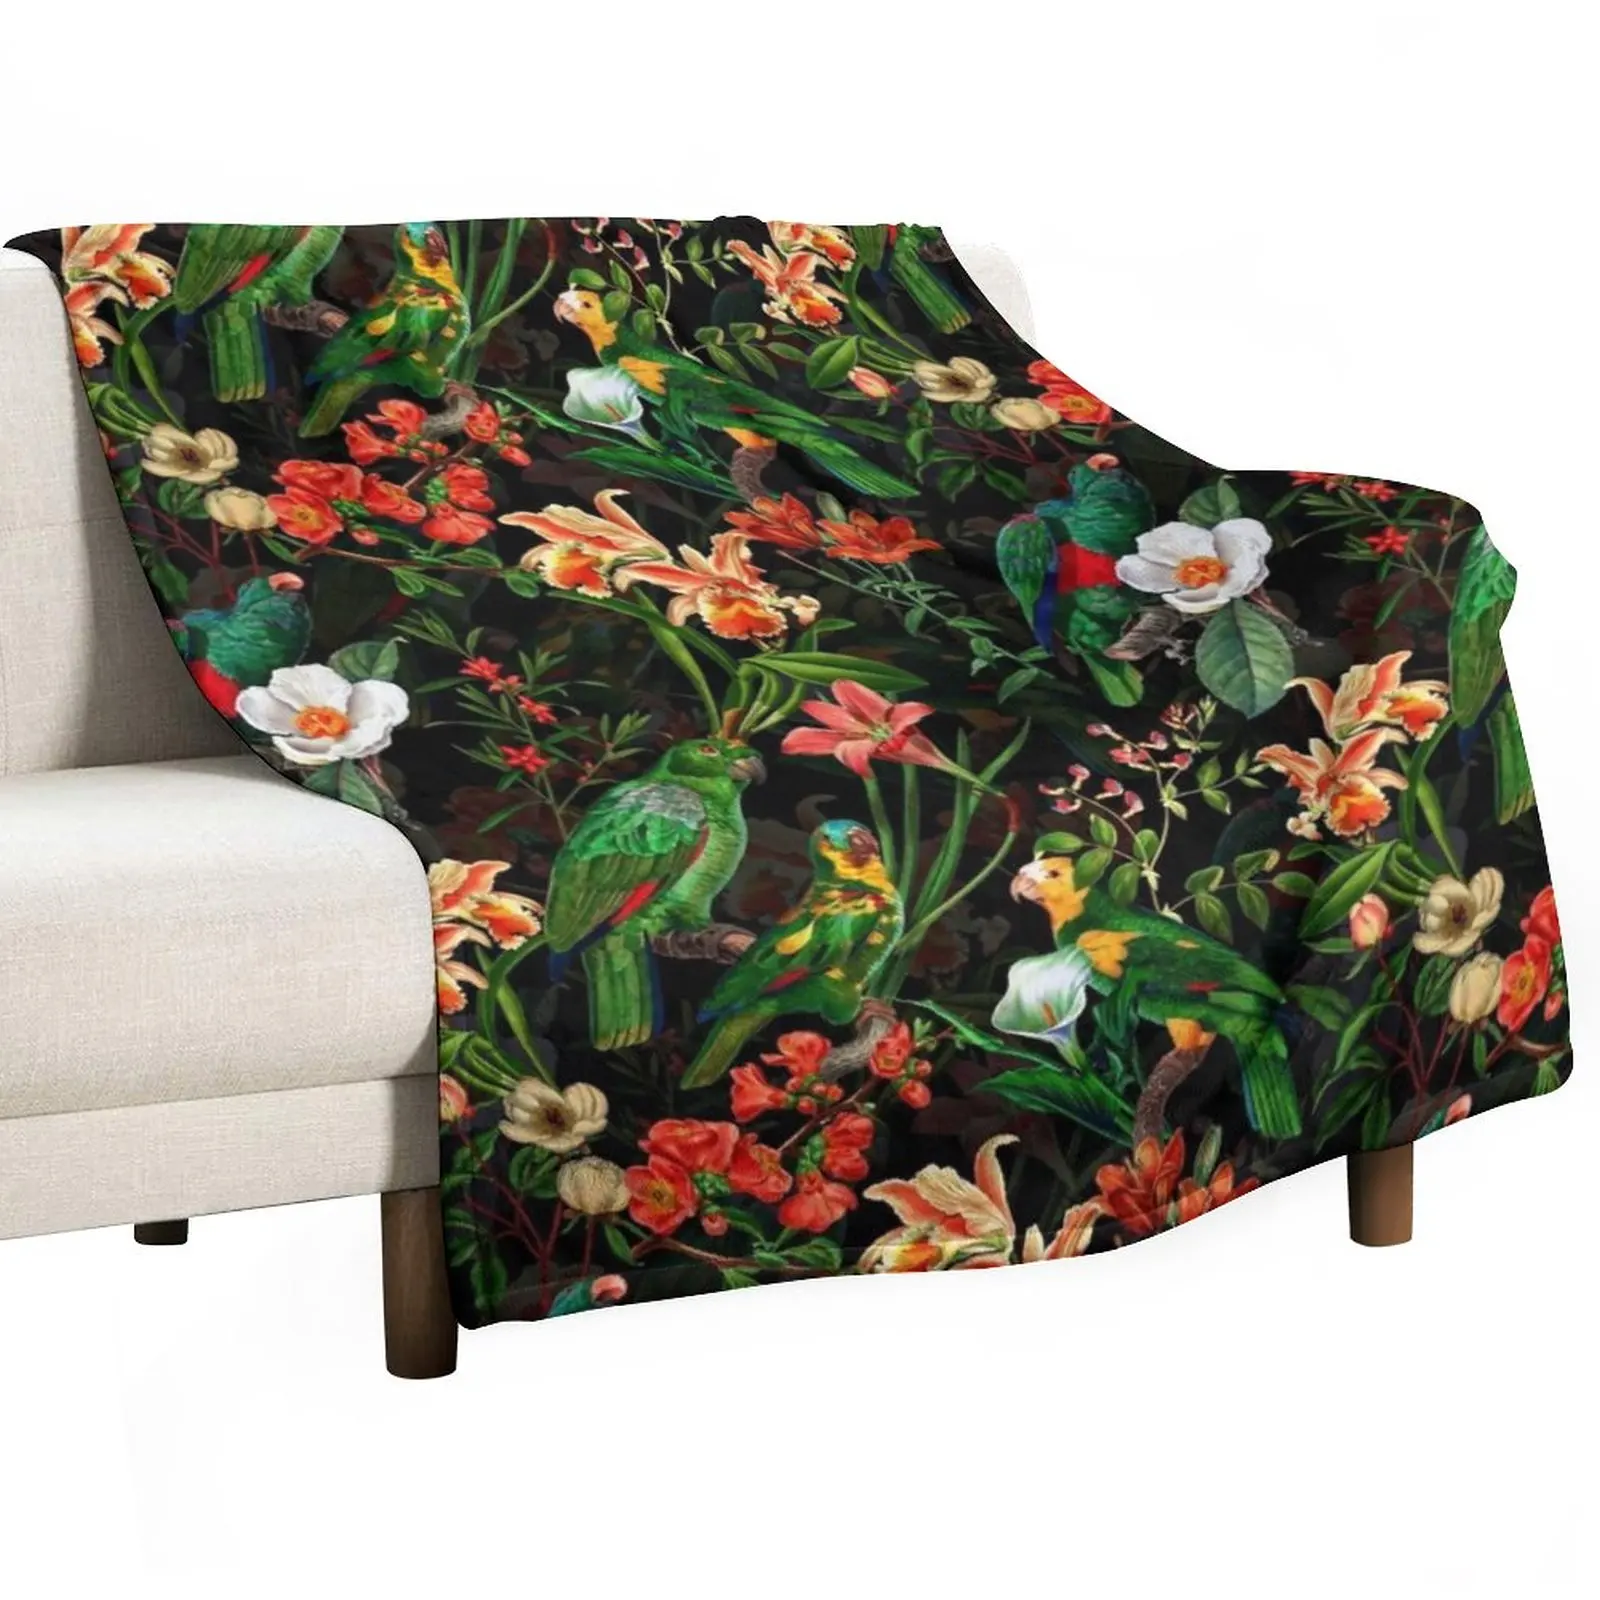 

Pierre Joseph Redoute tropical vintage jungle flowers and parrots nostalgic seamless mystic pattern Throw Blanket Multi-Purpose